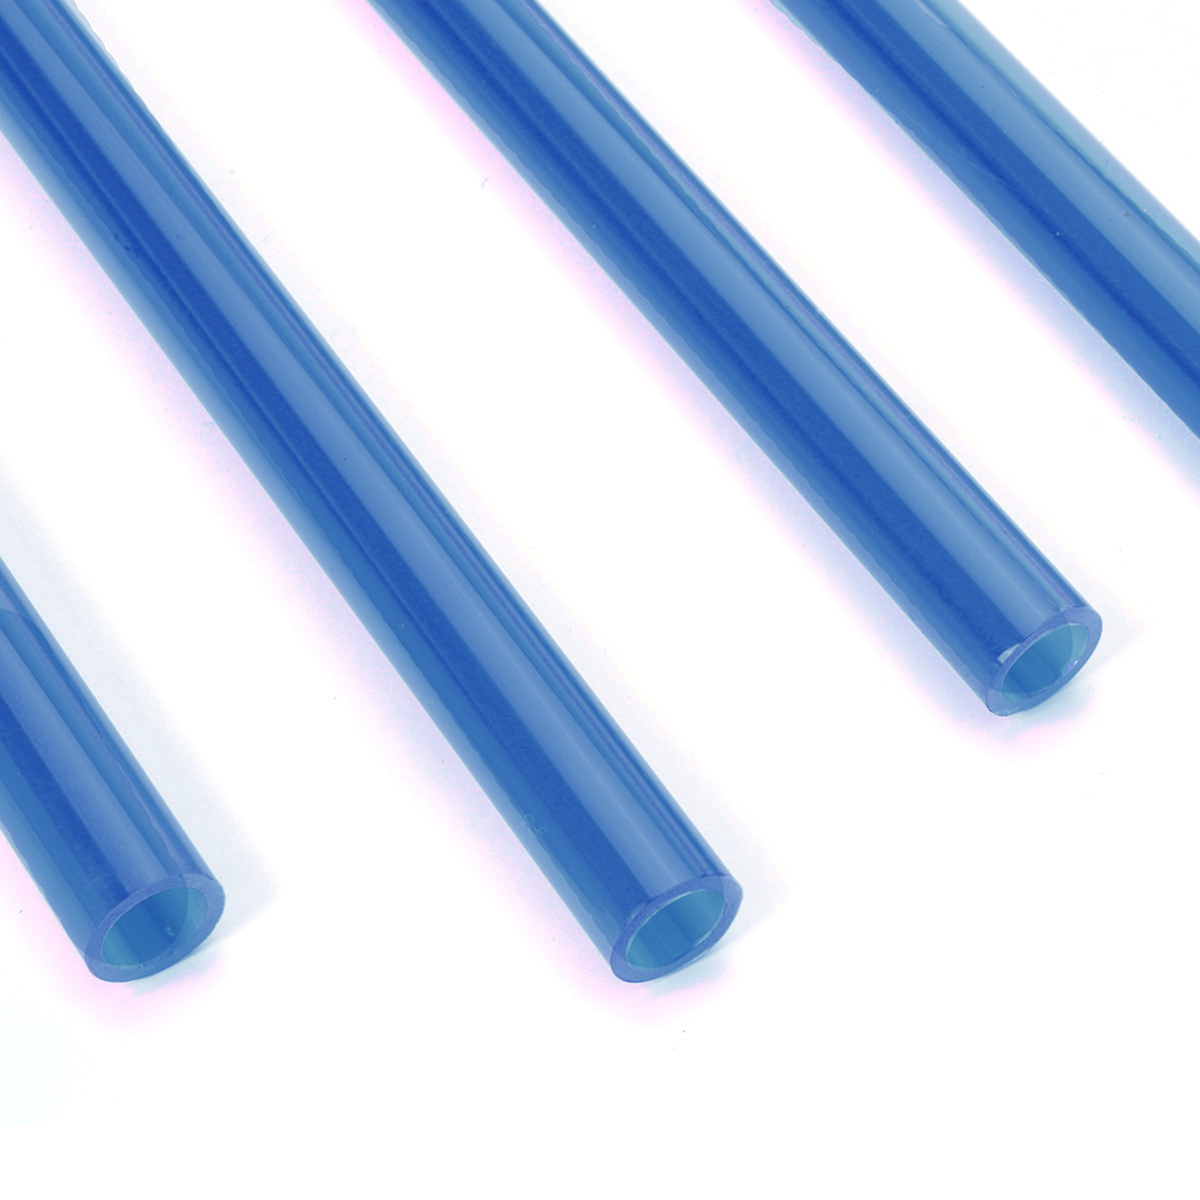 

4Pcs Blue 500mm PETG Tubing Rigid Hard Tubes 10/14mm Bending Water Cooling Hose For PC Case